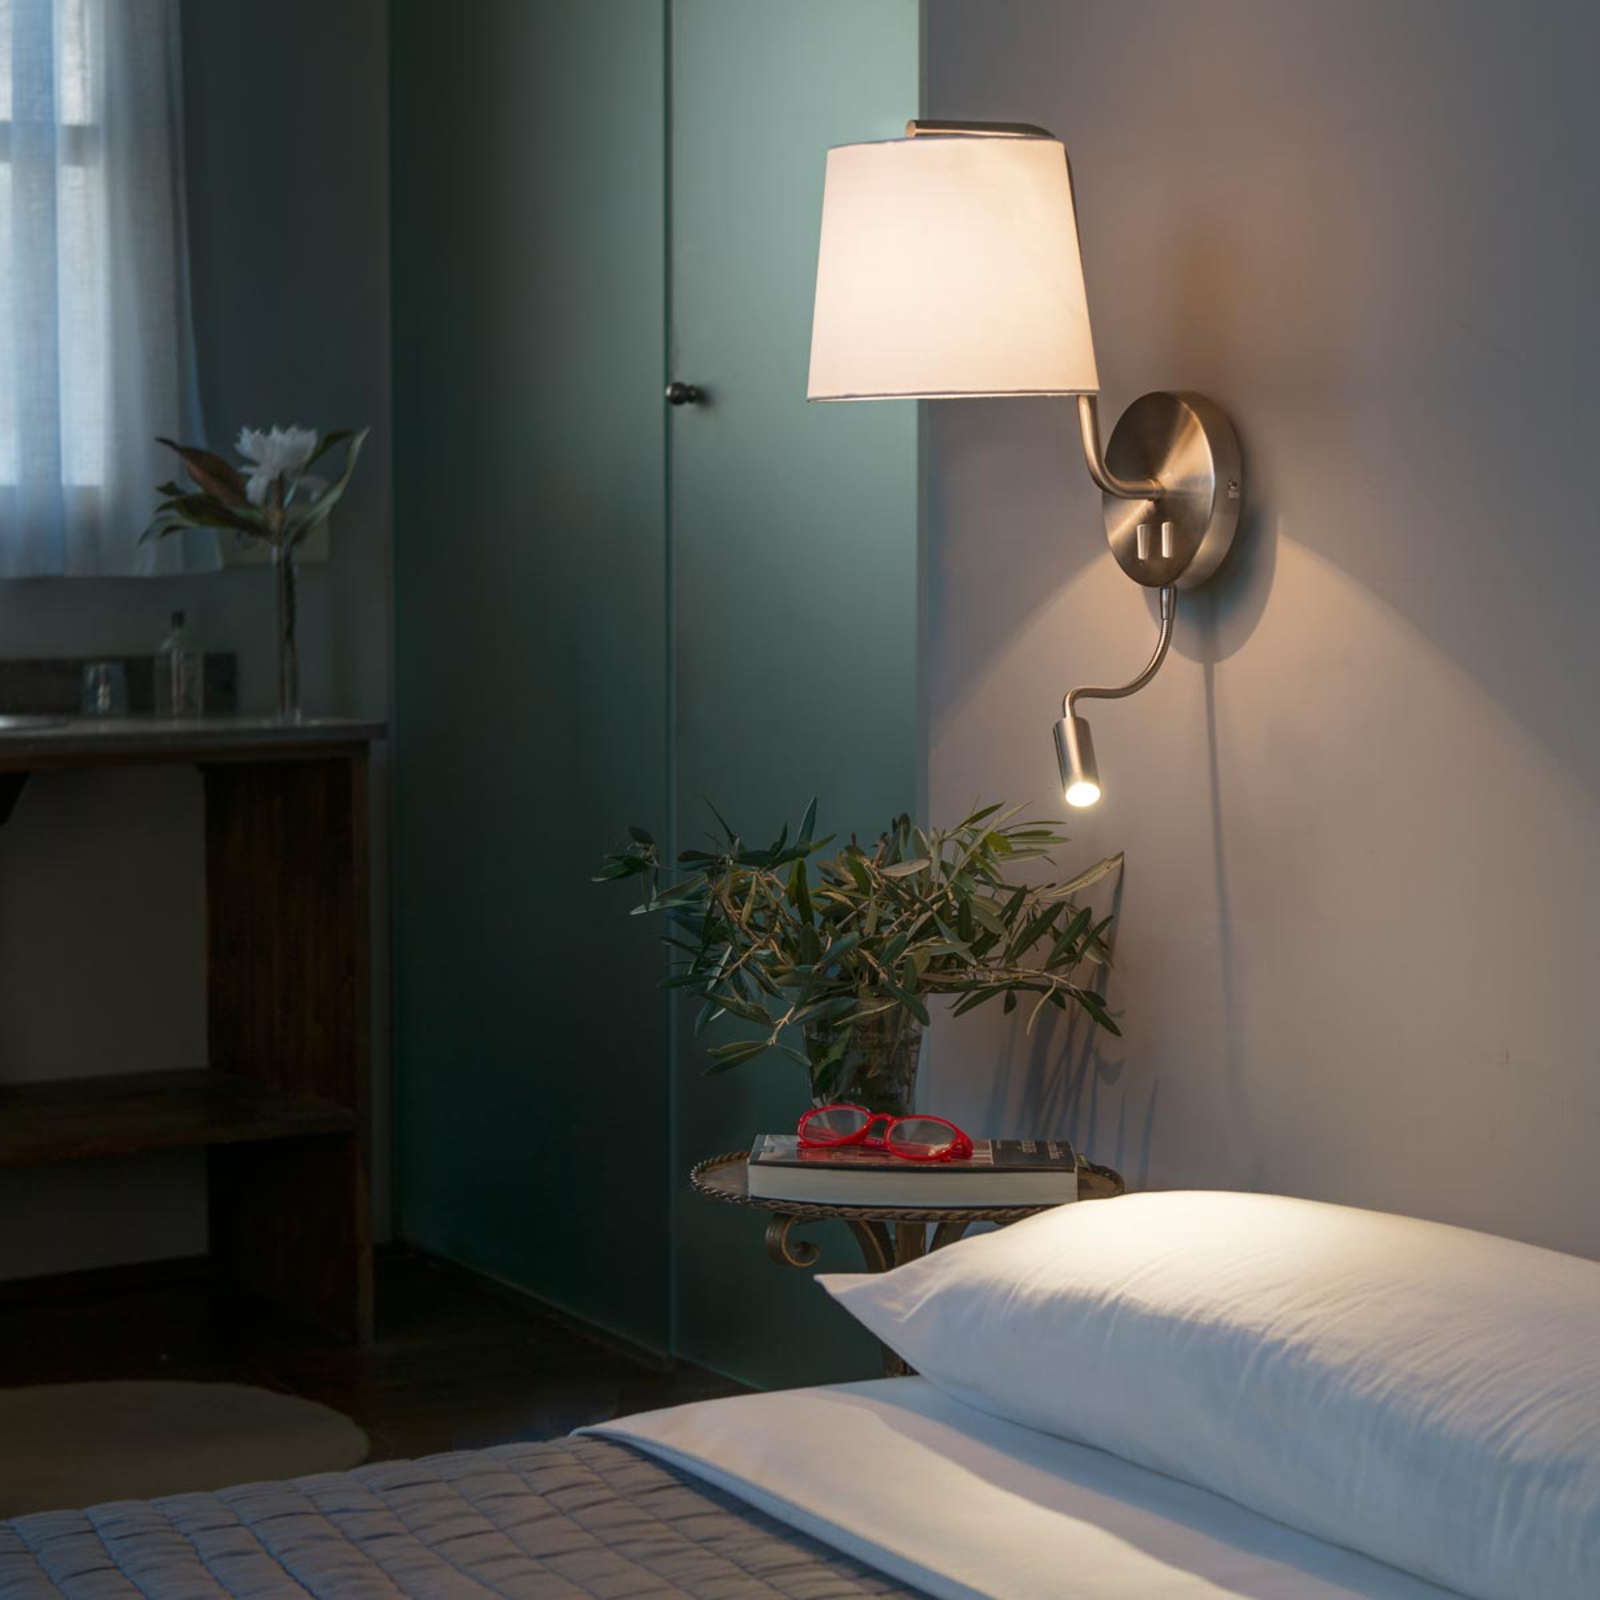 Nástenné svietidlo Berni s LED lampou na čítanie